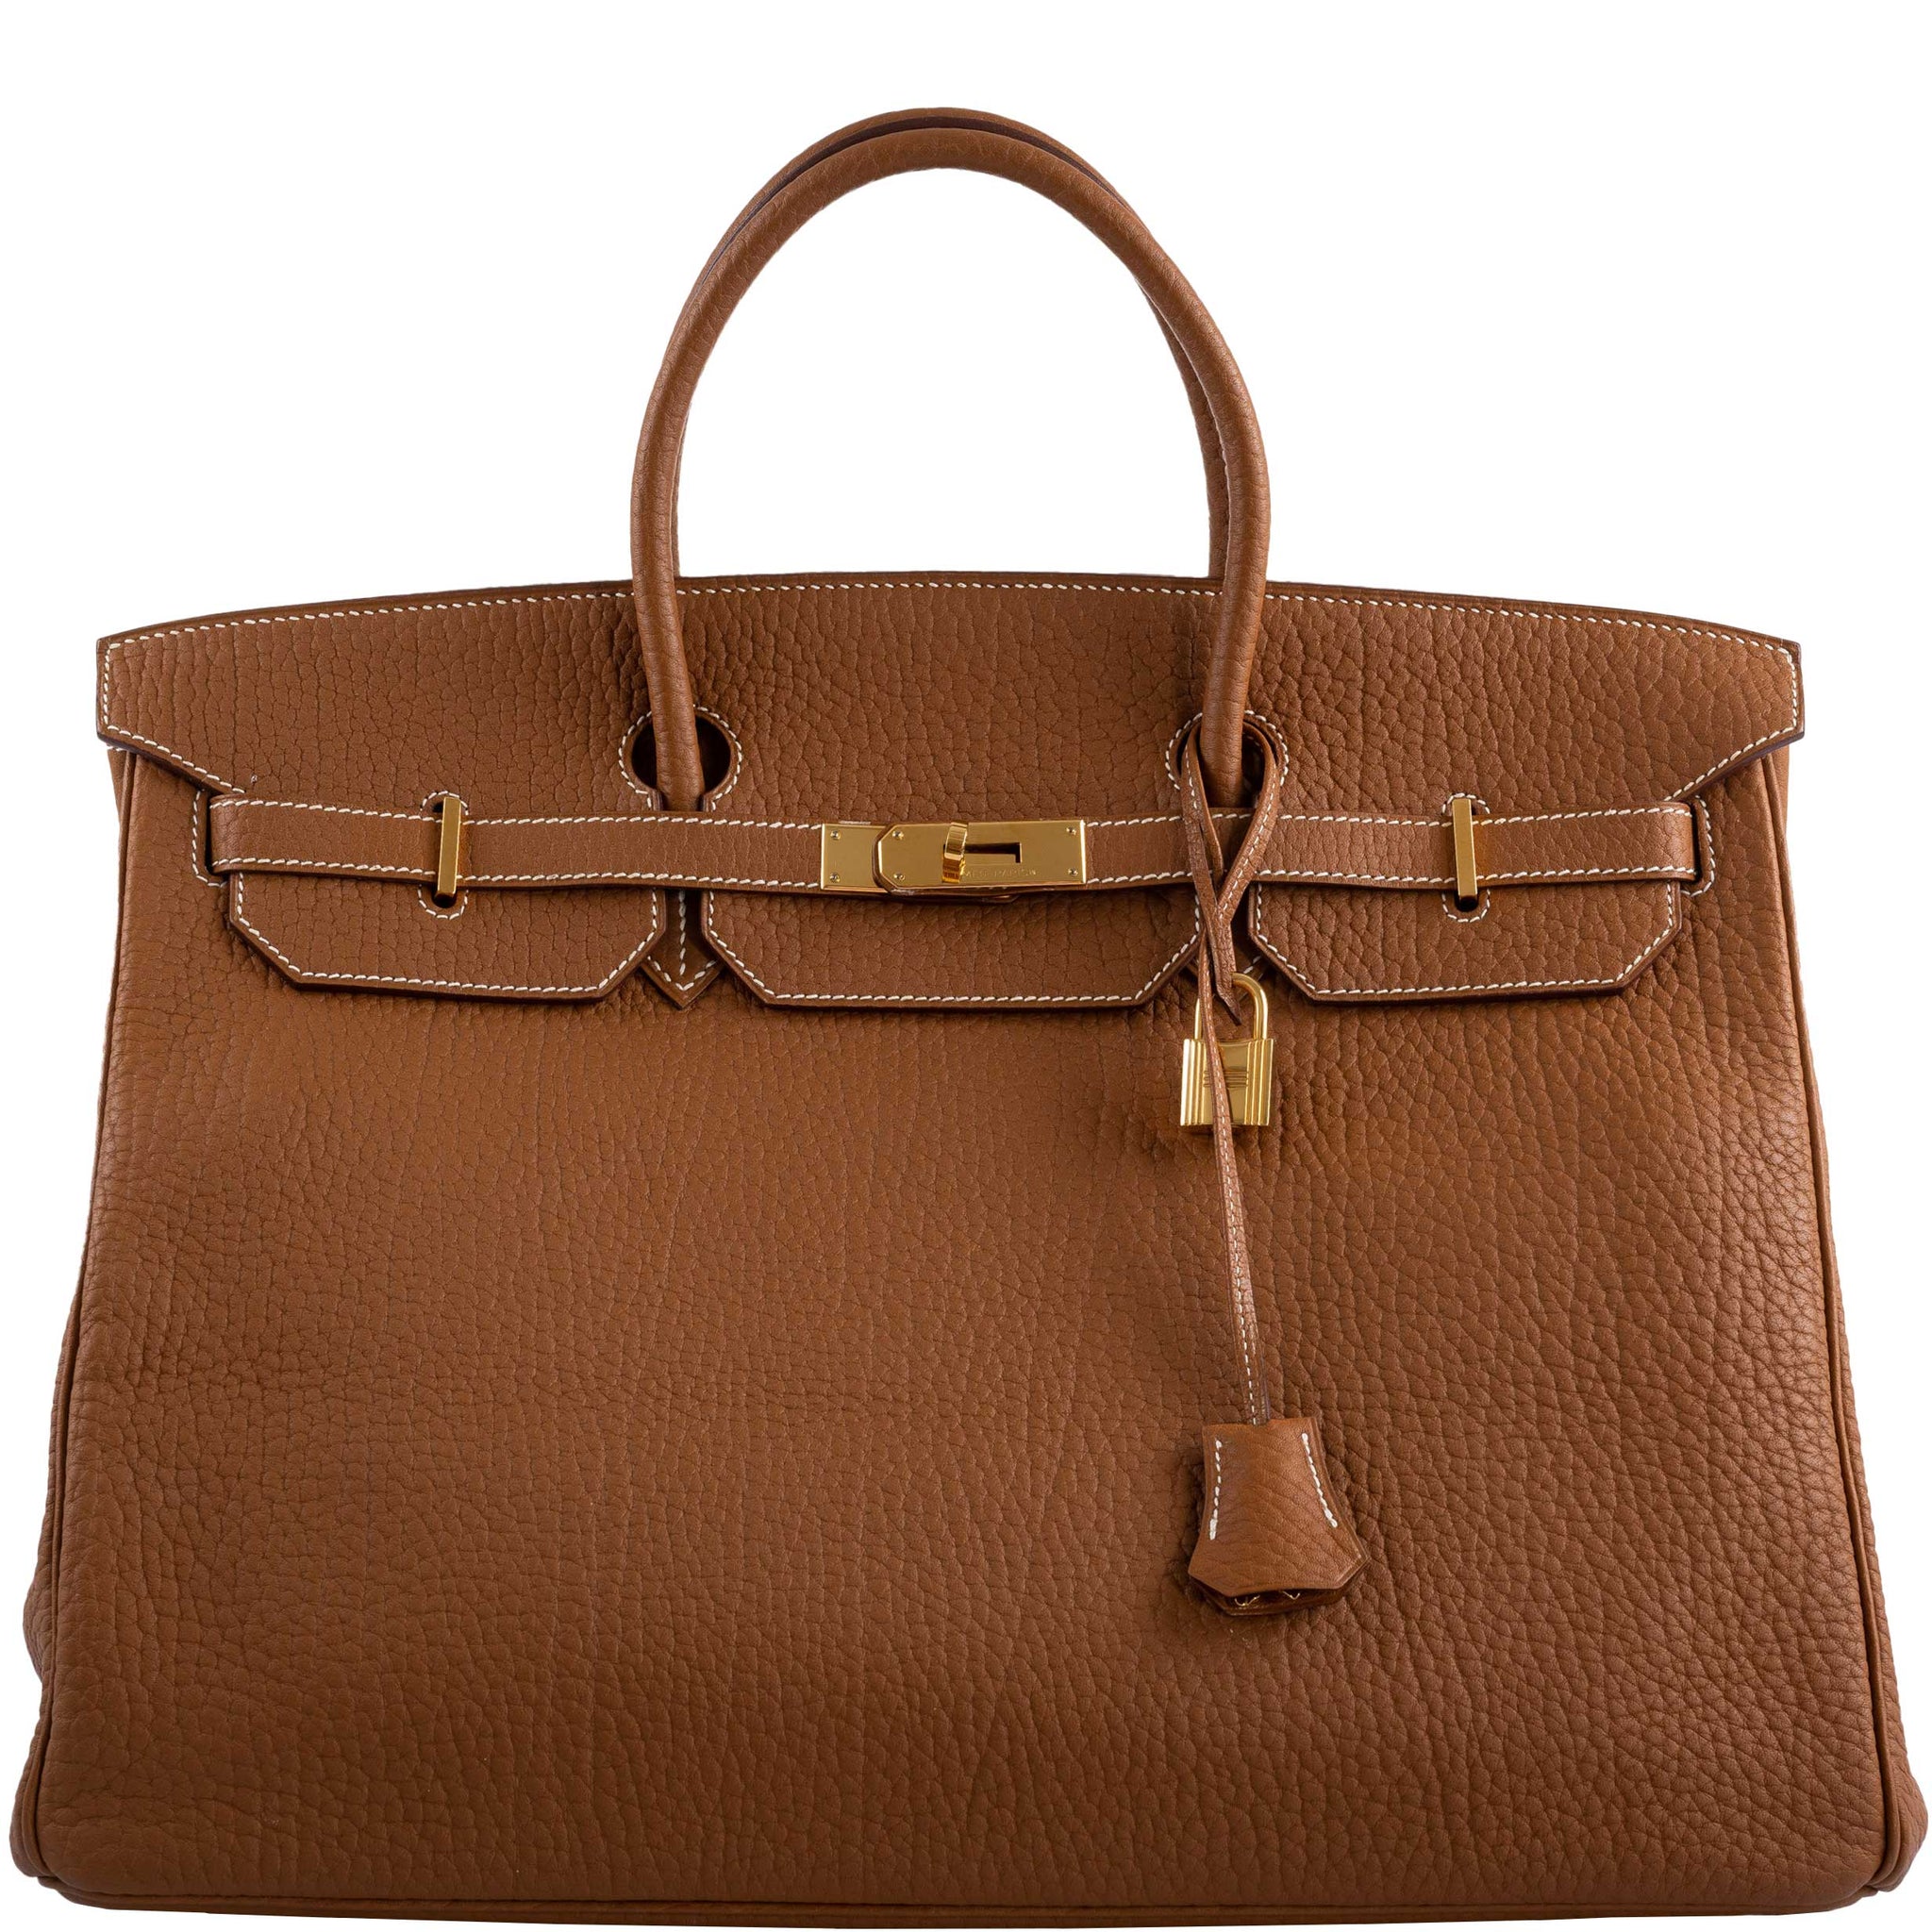 Hermes Birkin Bag 40cm Brown Leather Auction